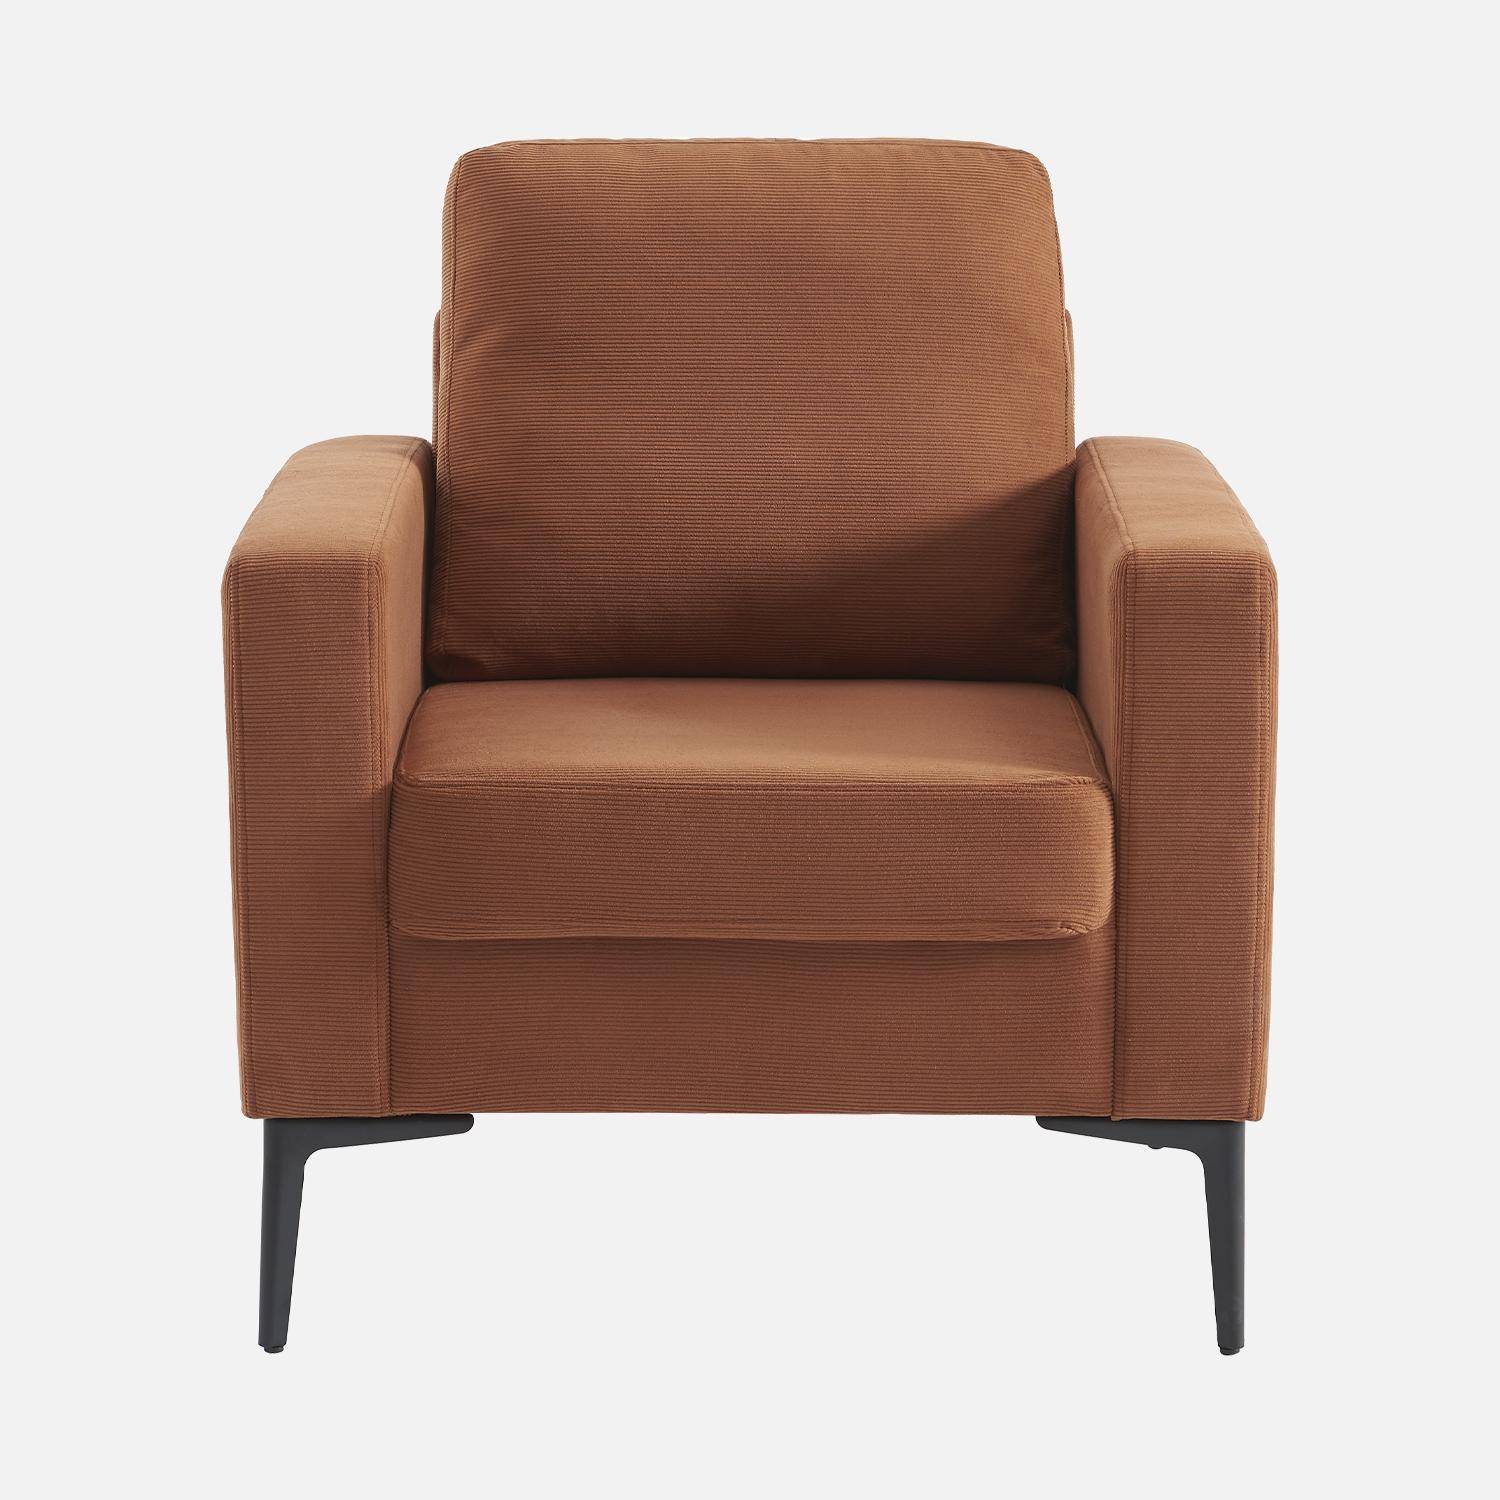 Sessel mit Kord-Bezug  - Terrakotta - Bjorn - mit geraden Metallfüßen,sweeek,Photo4